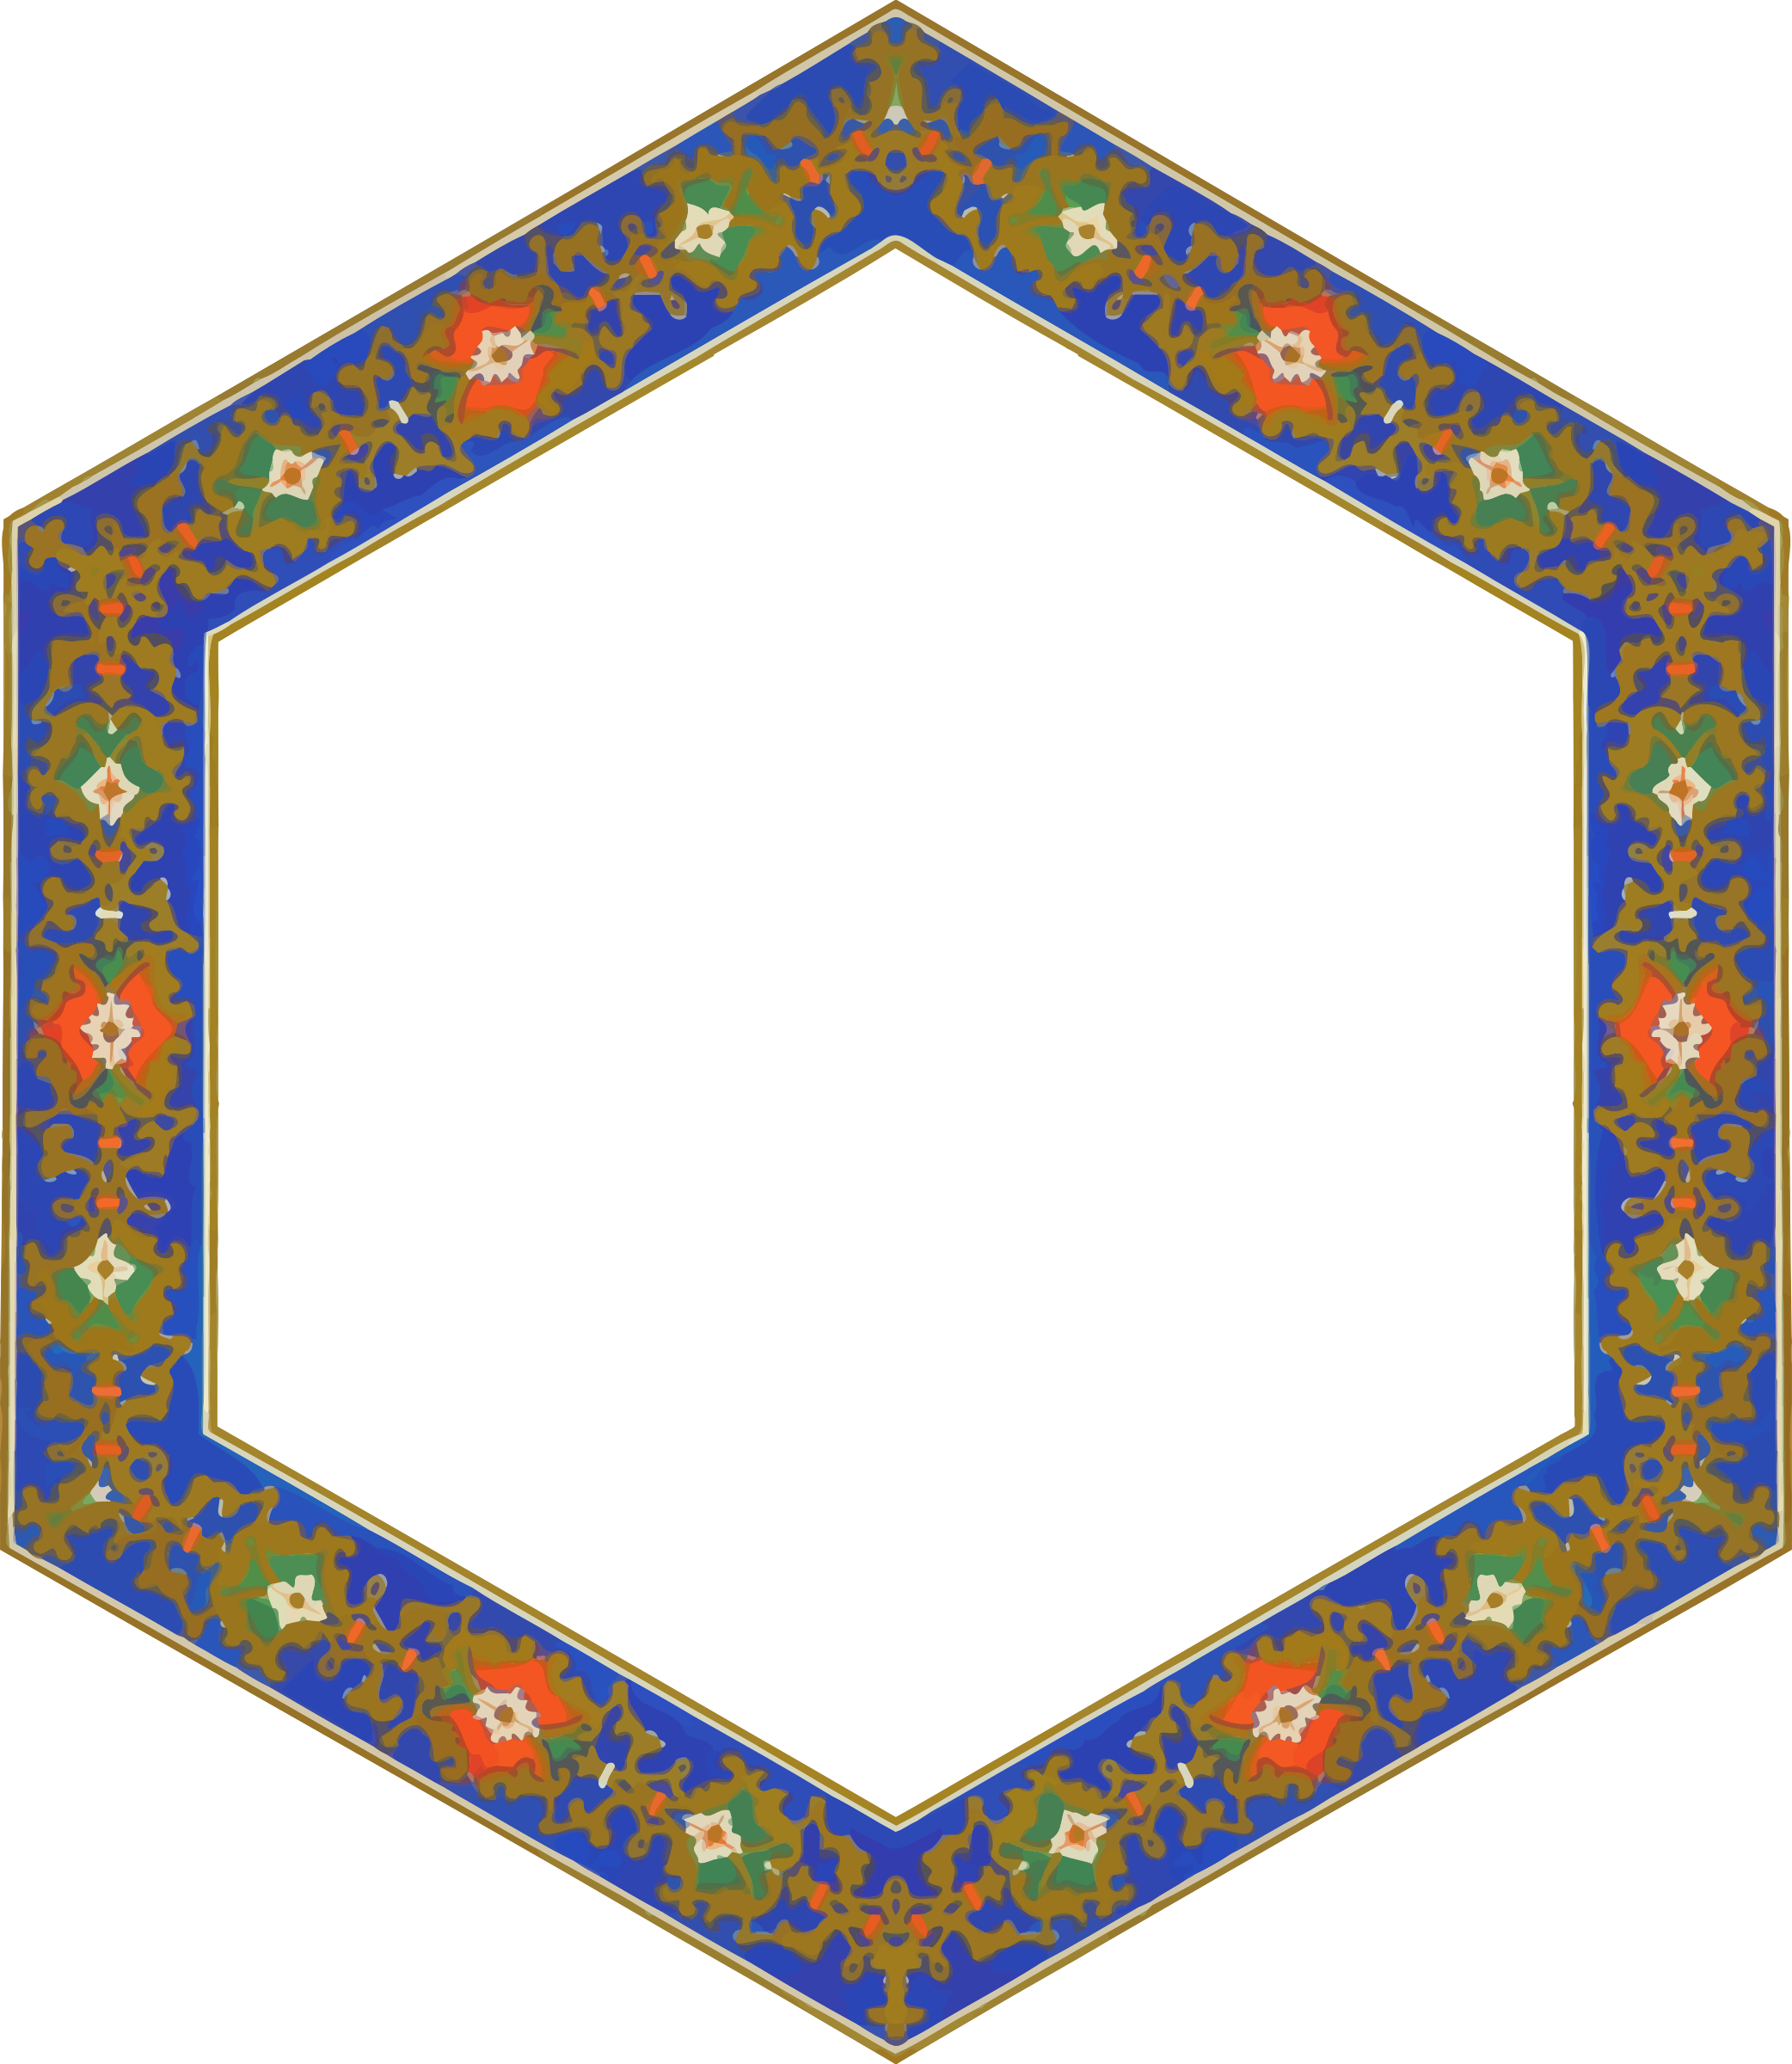 Hexagon clipart hexagonal. Ornate frame big image